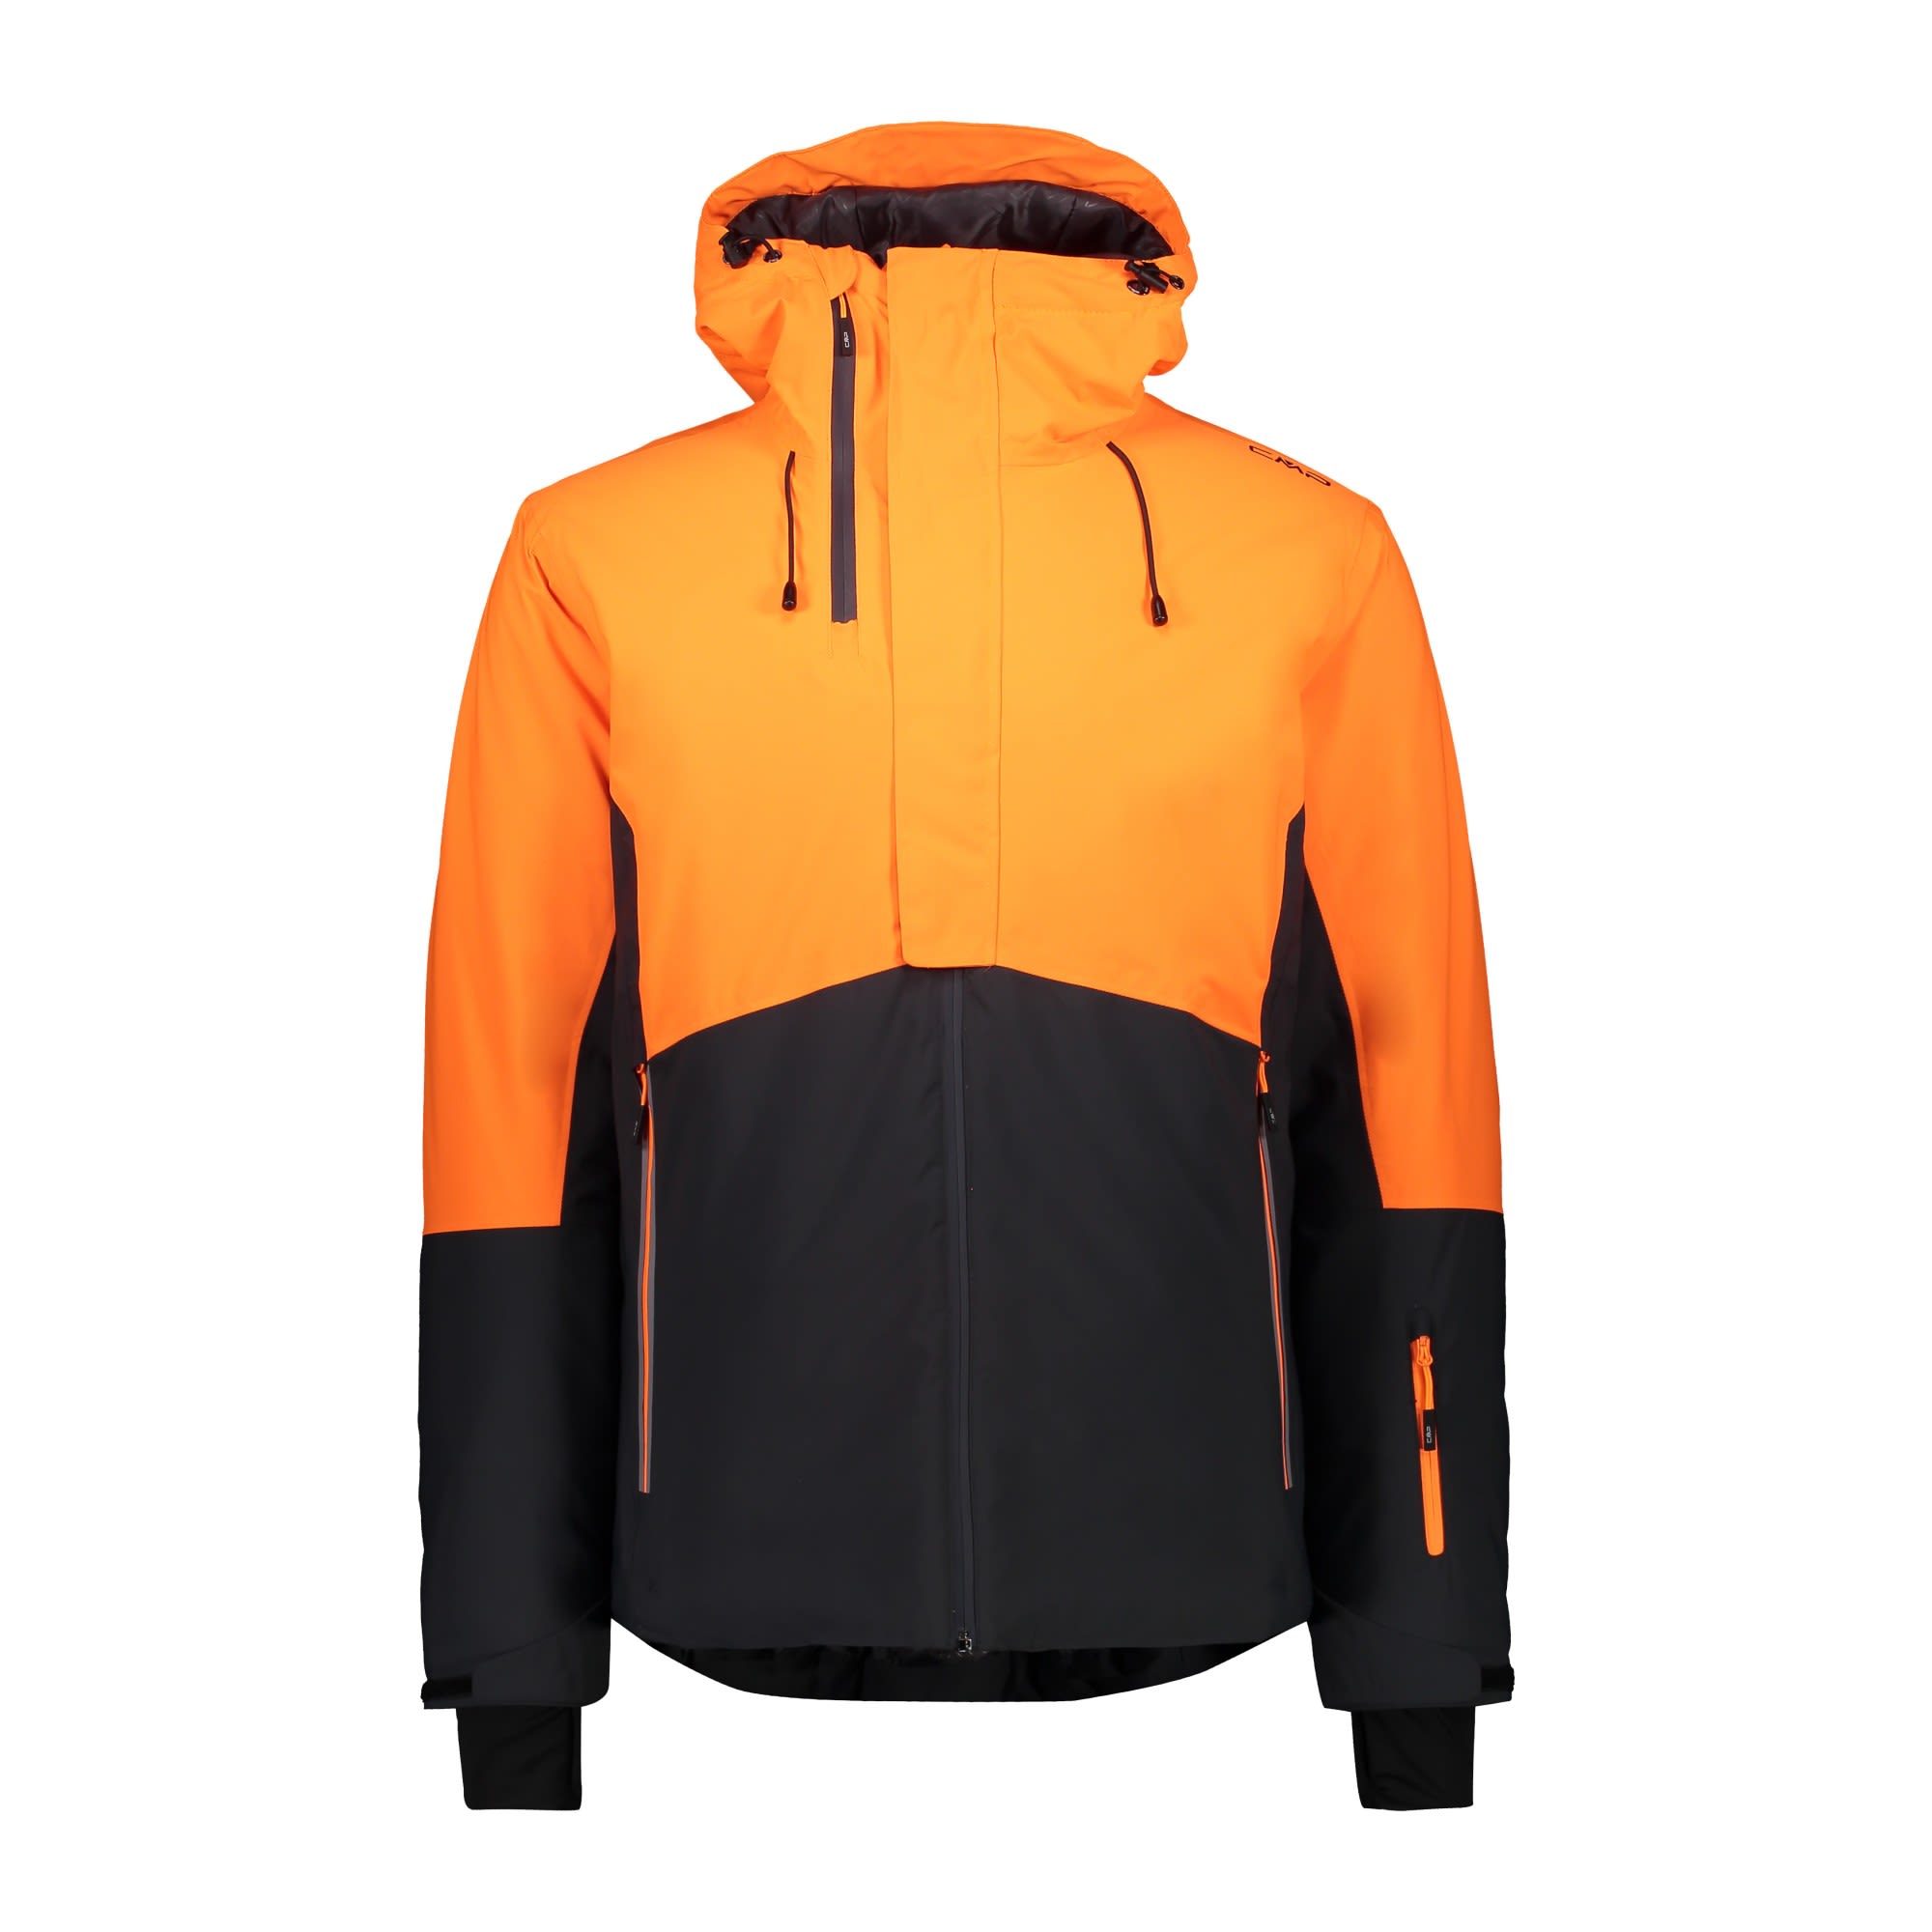 CMP Mid Jacket FIX Hood Colorblock - Orange - Schwarz- Male Isolationsjacken- Grsse 58 - Farbe Antracite unter CMP